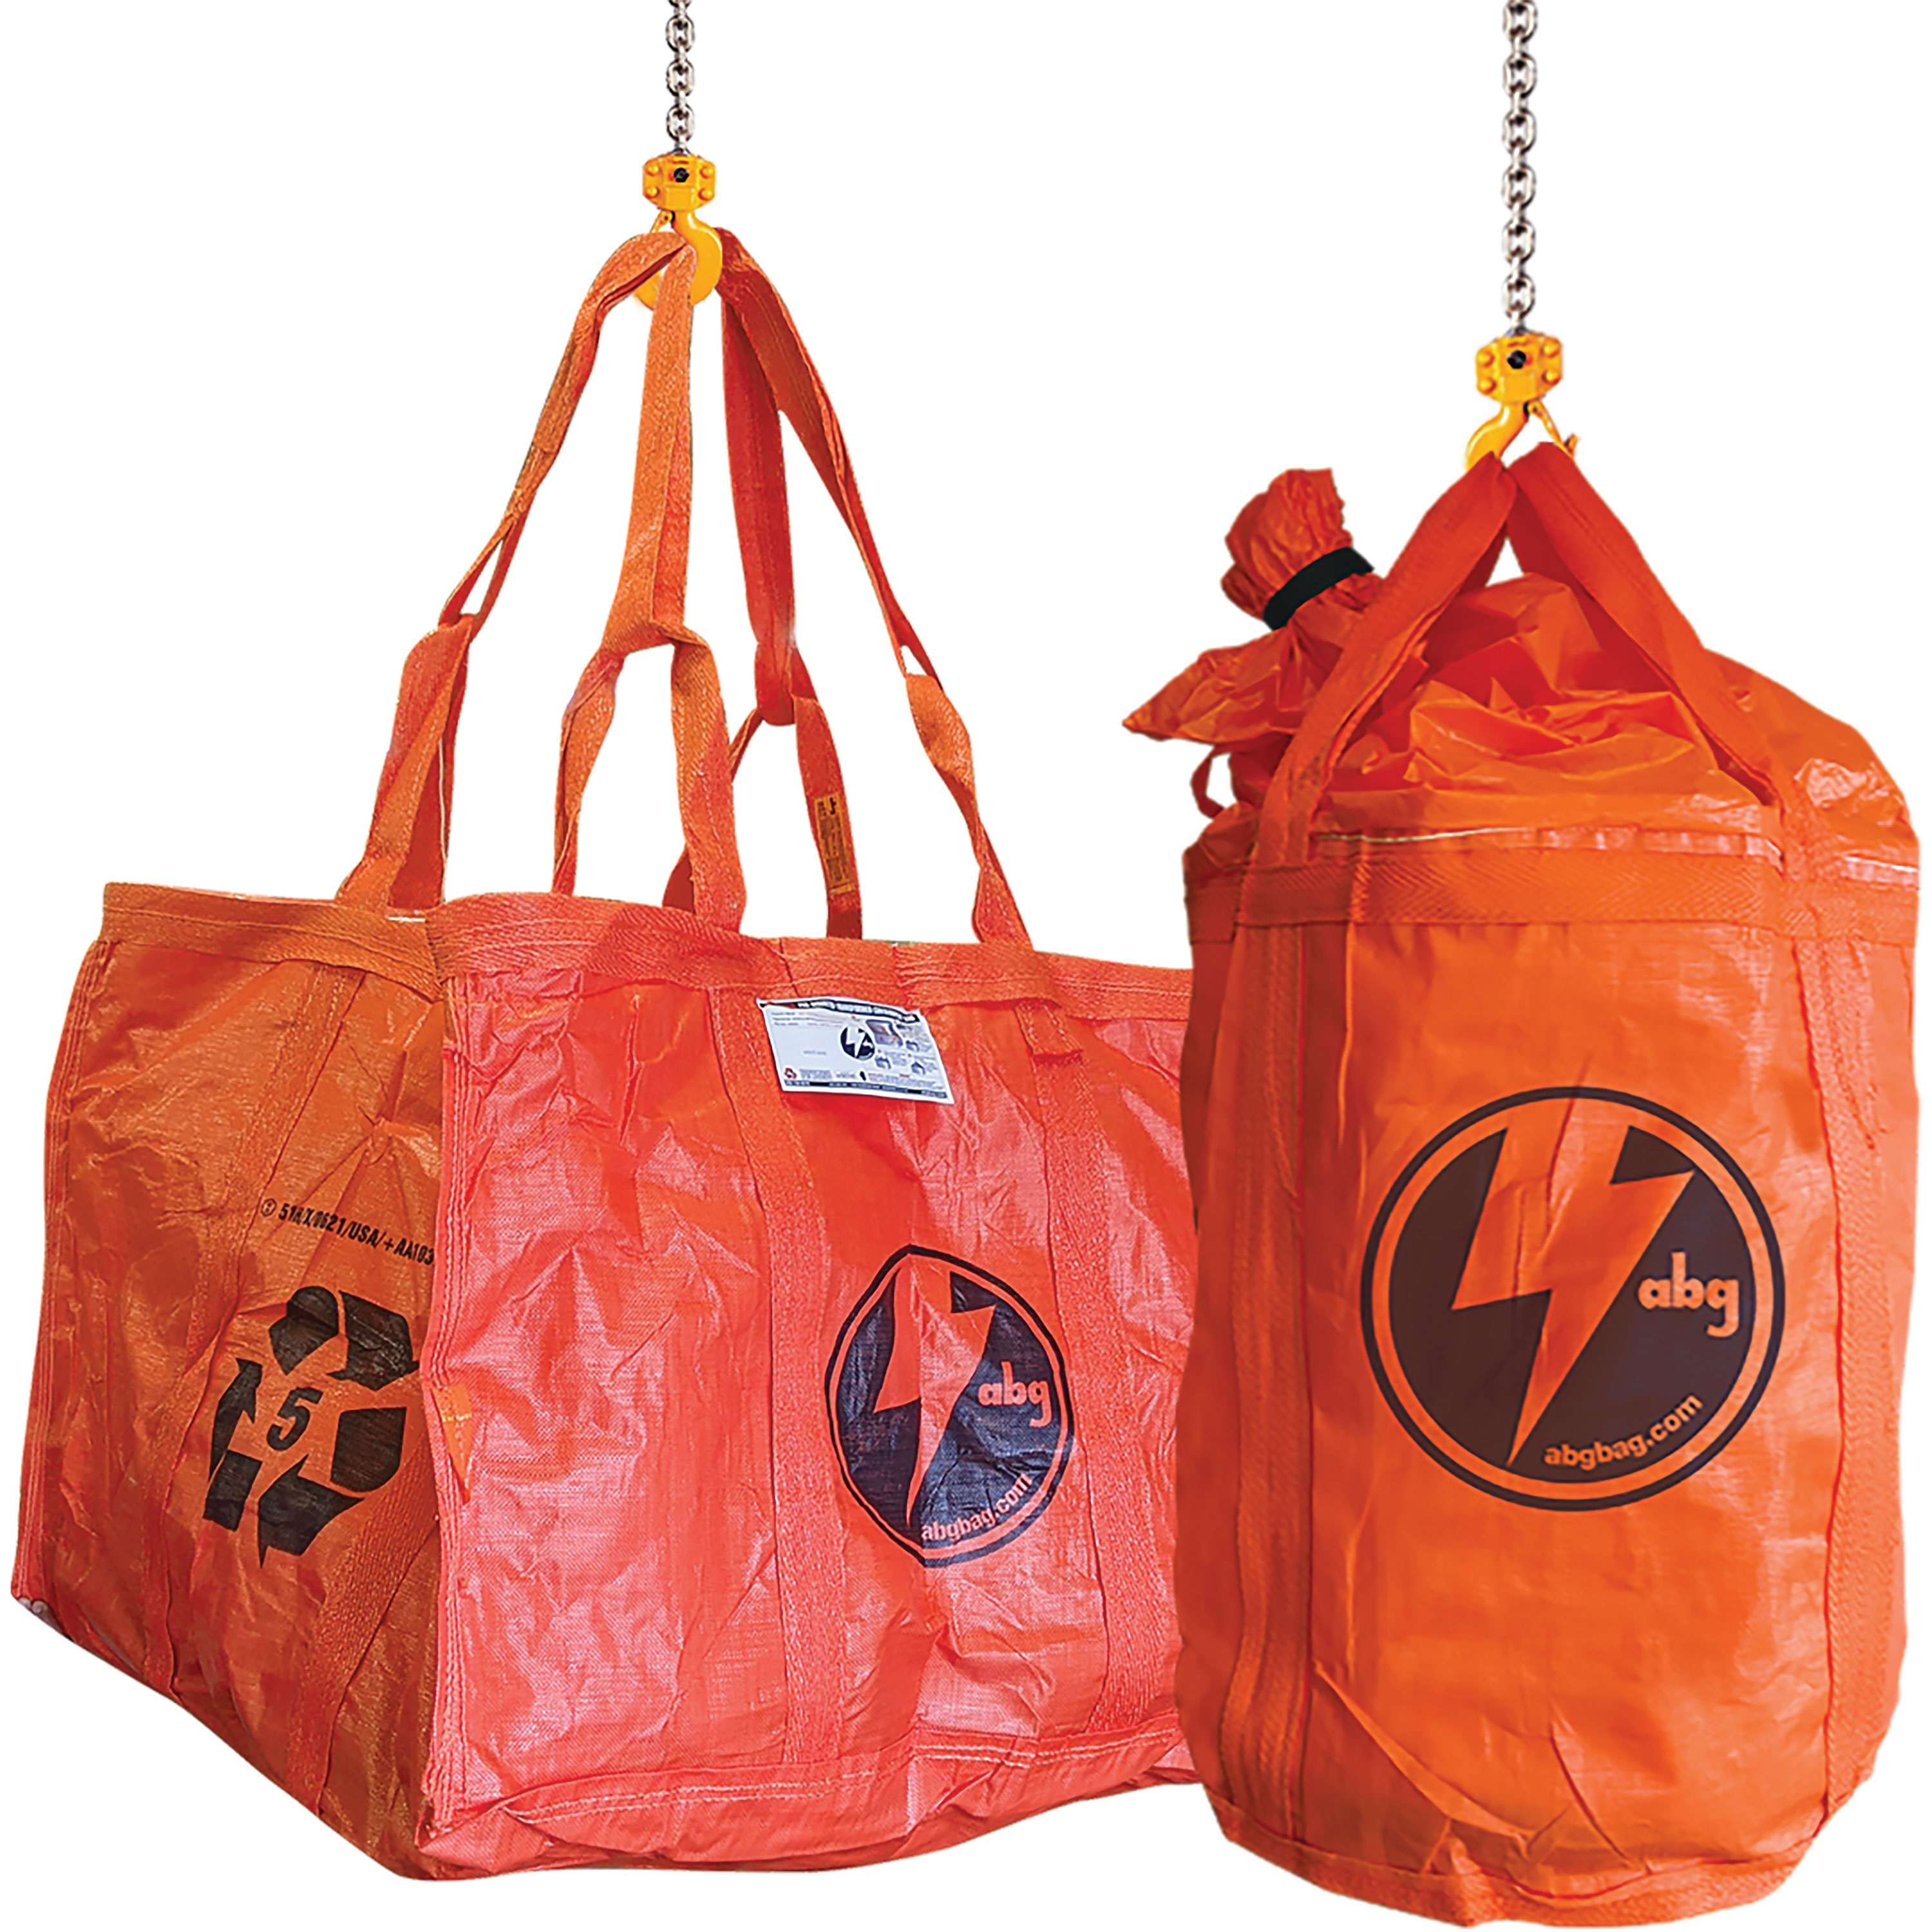 Two orange bags labeled ABG Bag. Image by ABG Bag.